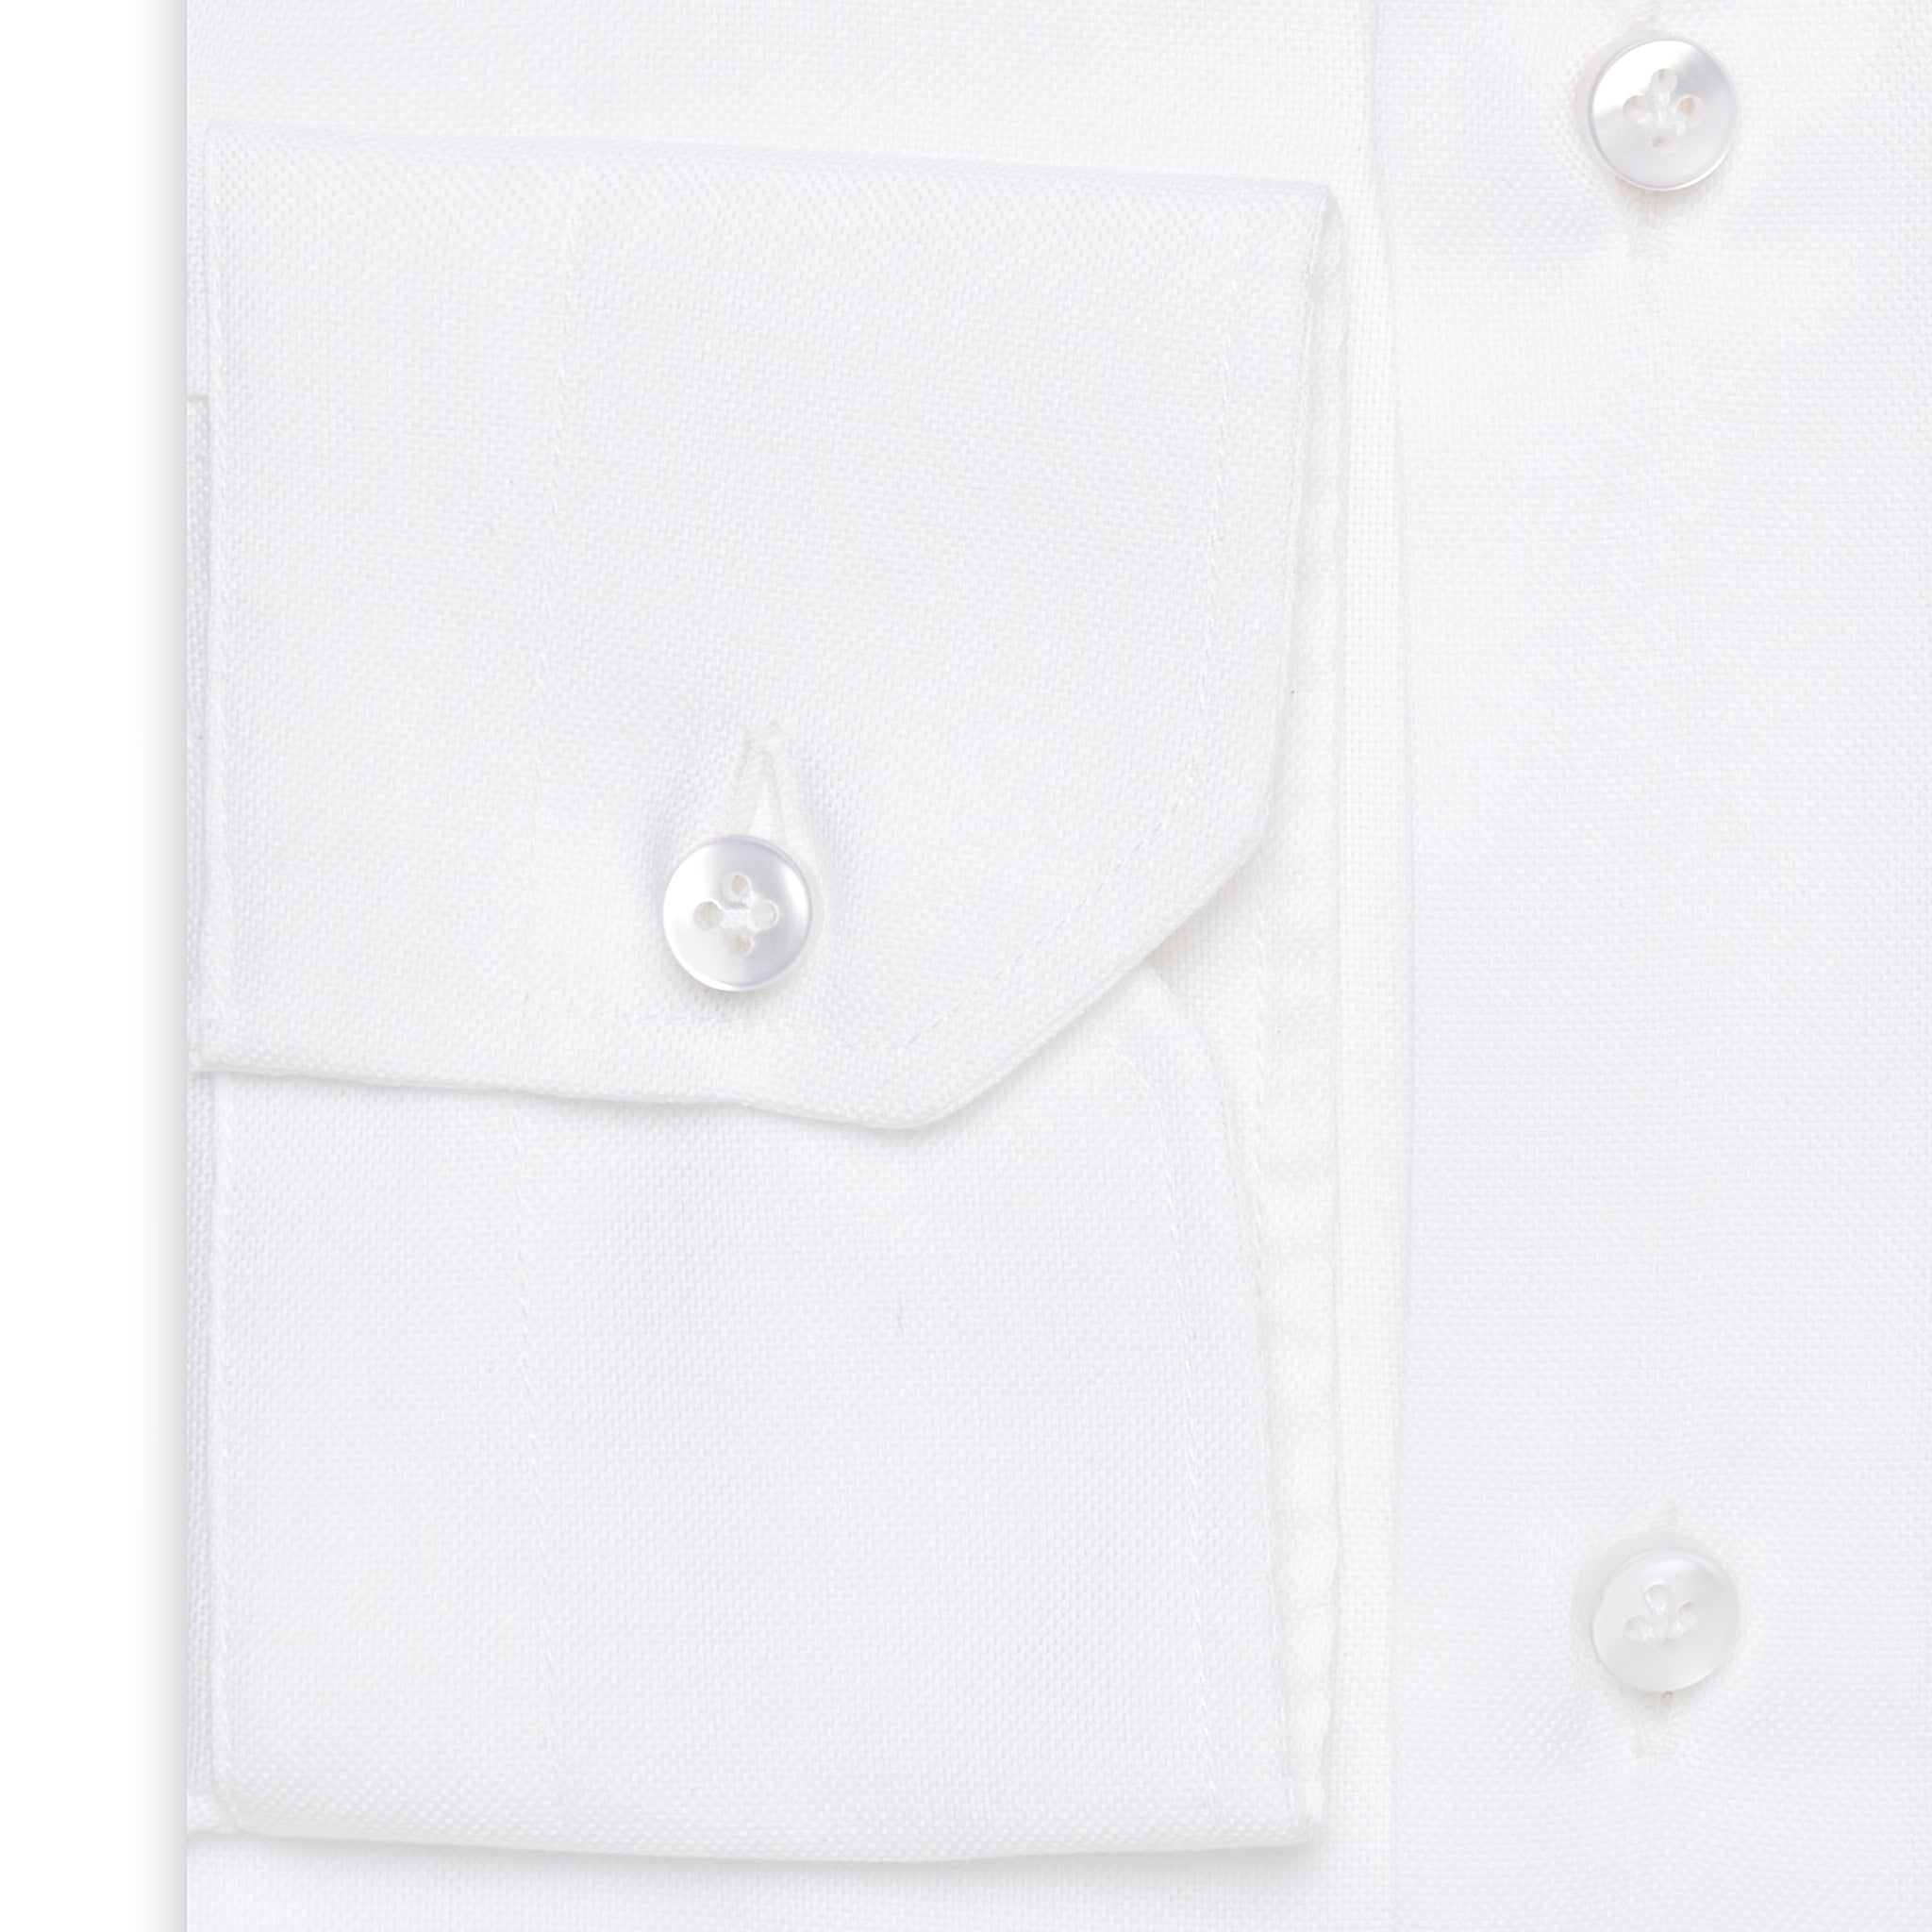 SARTORIO by KITON White Cotton Royal Oxford Dress Shirt NEW Slim Fit